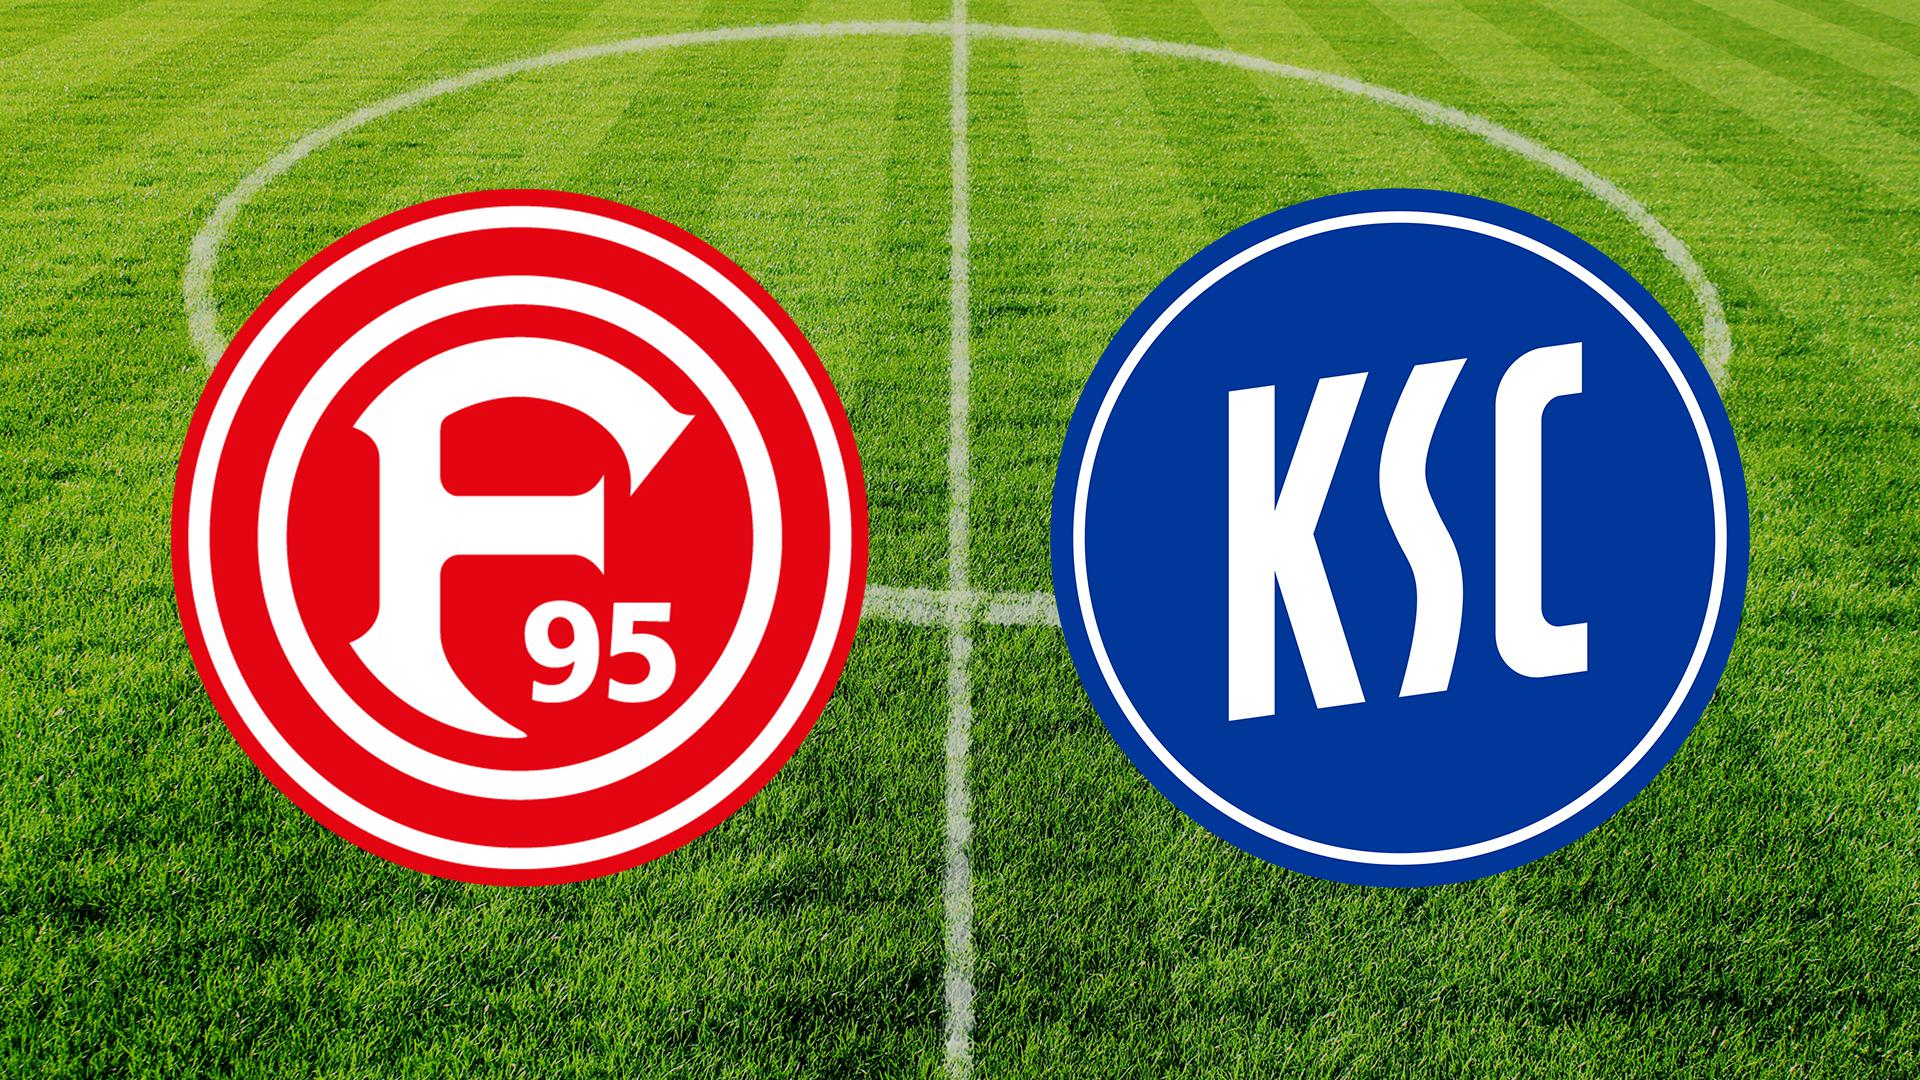 Am Samstag tritt der KSC bei Fortuna Düsseldorf an.